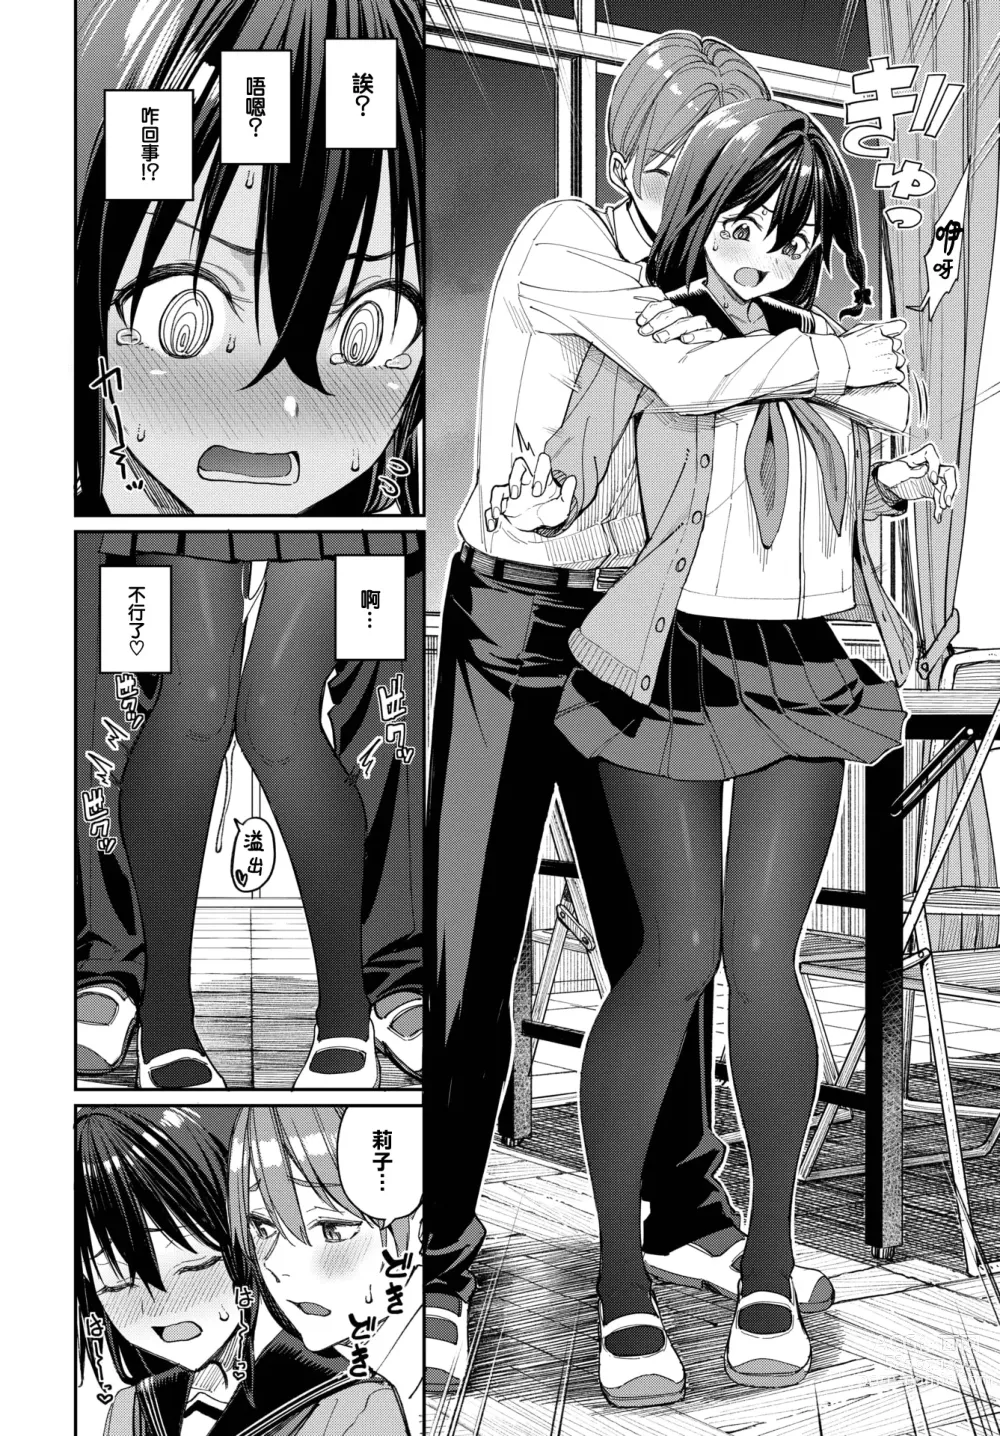 Page 6 of manga Riko no Hatsujou Chuuihou! - Im in heat so much. I can't take it...